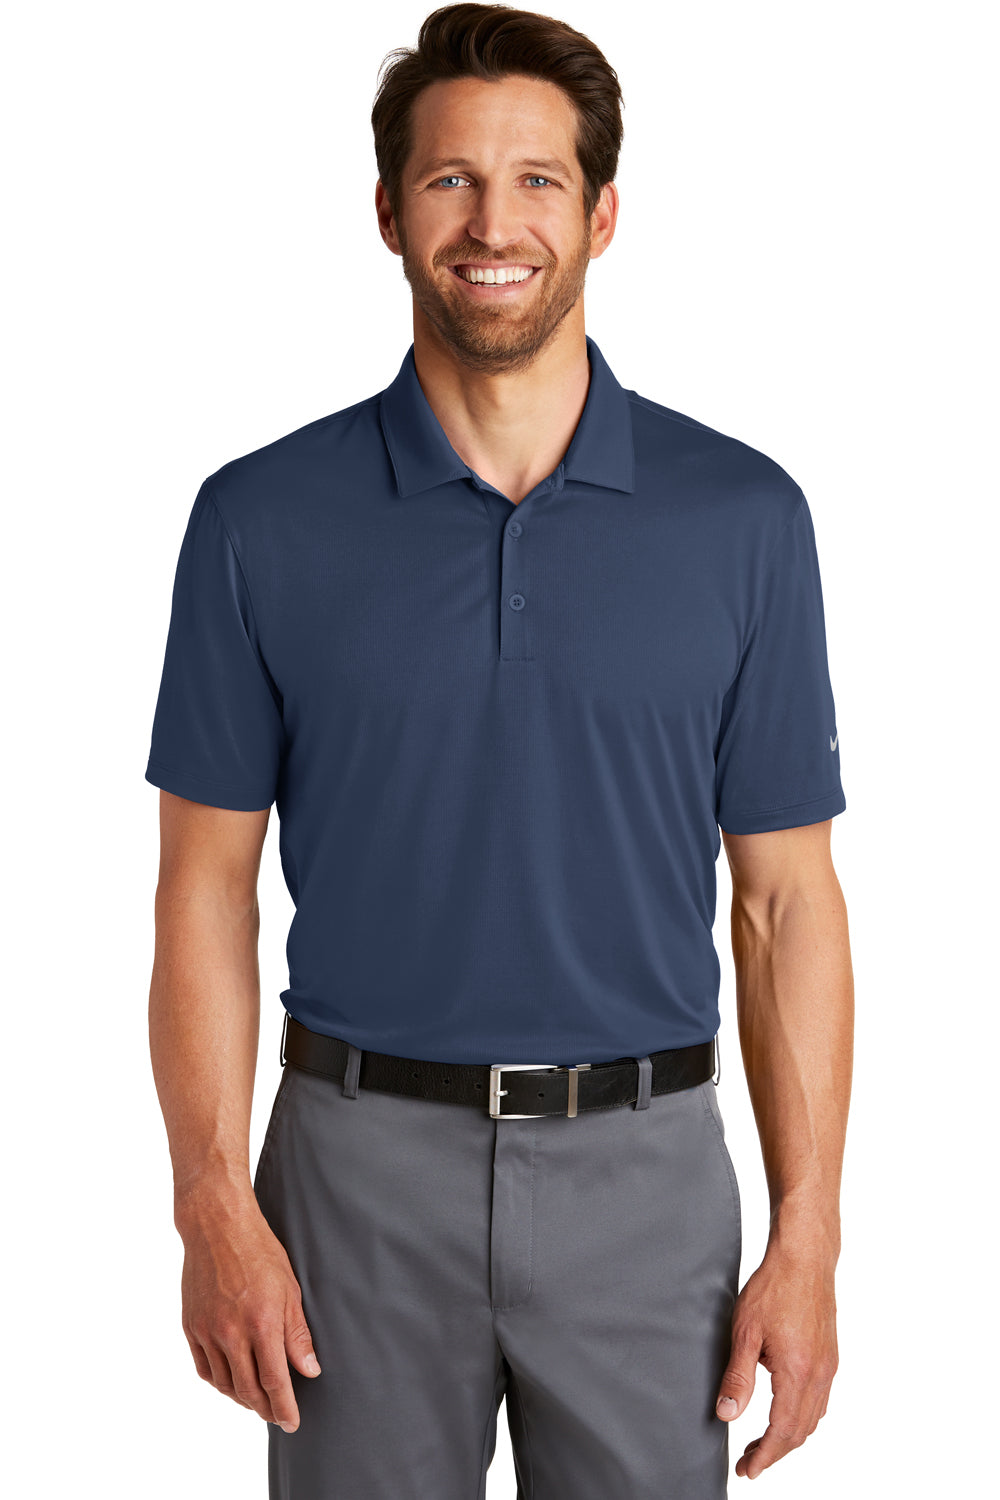 Nike 883681 Mens Legacy Dri-Fit Moisture Wicking Short Sleeve Polo Shirt Midnight Navy Blue Model Front